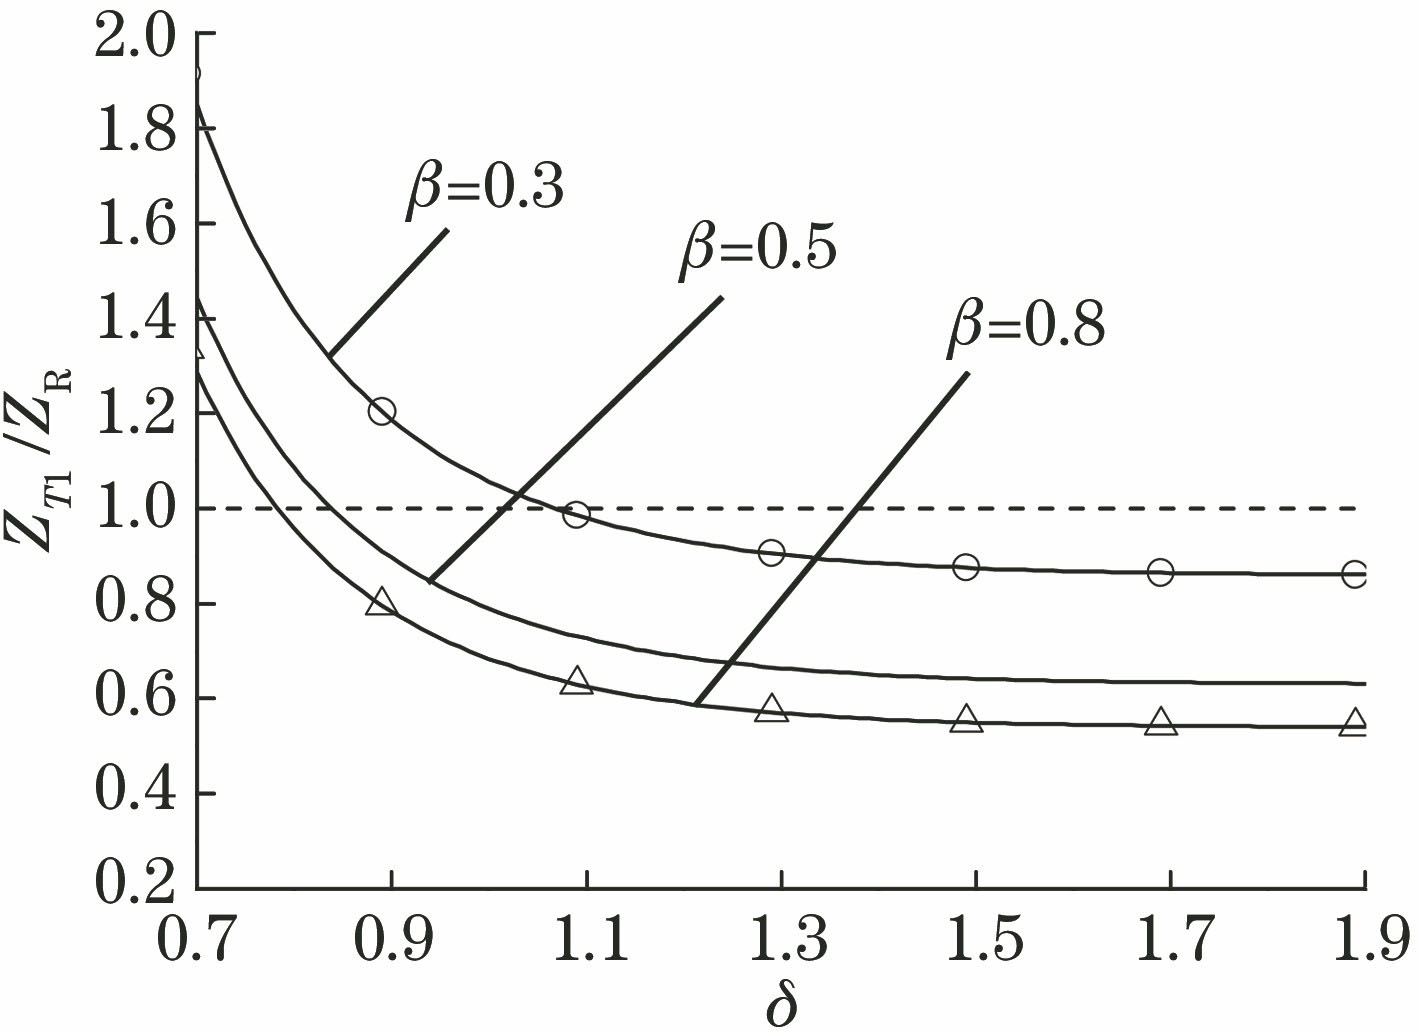 zT1/zR versus δ with different value of β